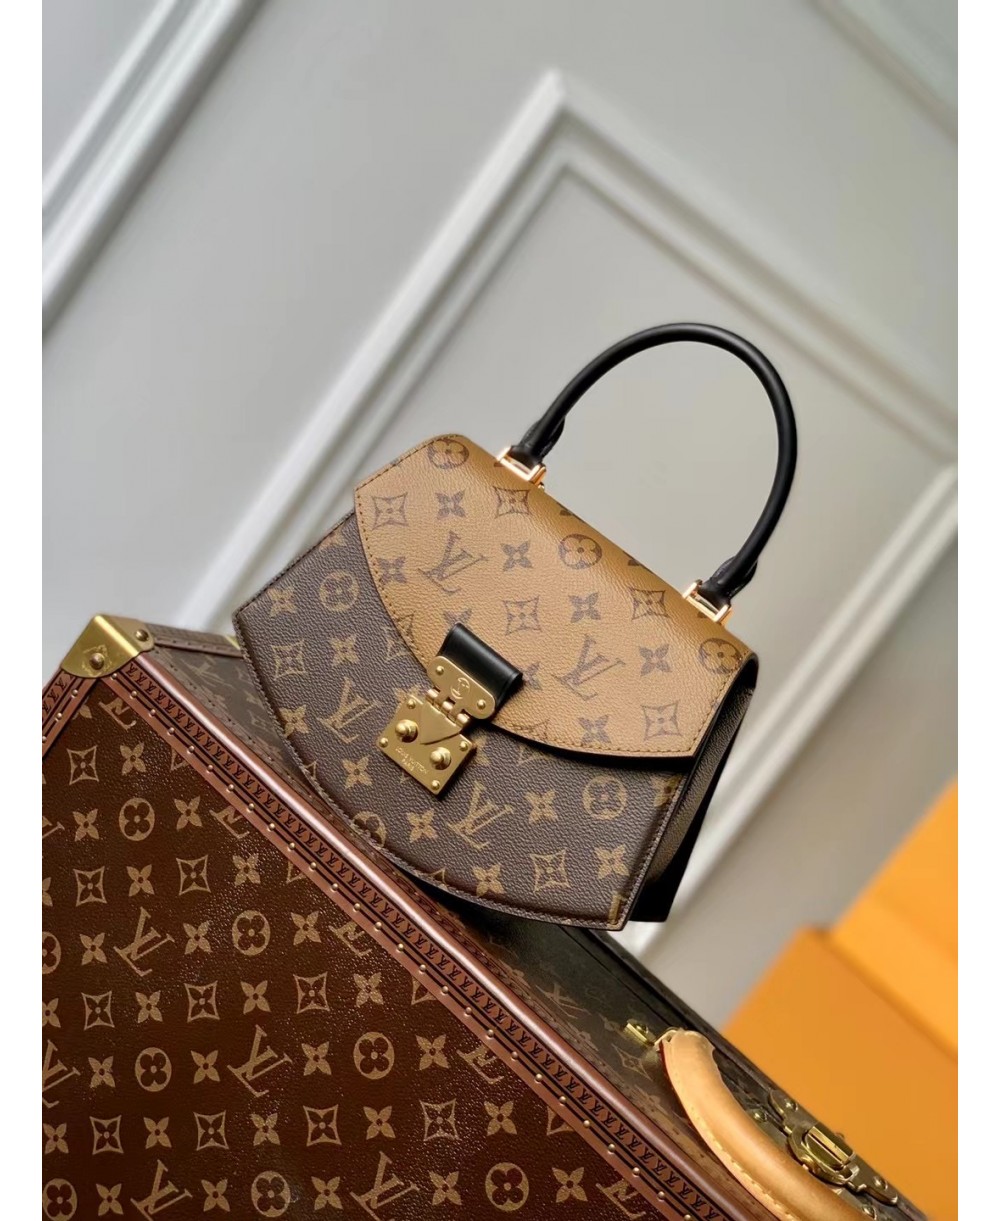 M46548 Louis Vuitton Monogram Reverse Canvas Tilsitt Handbag